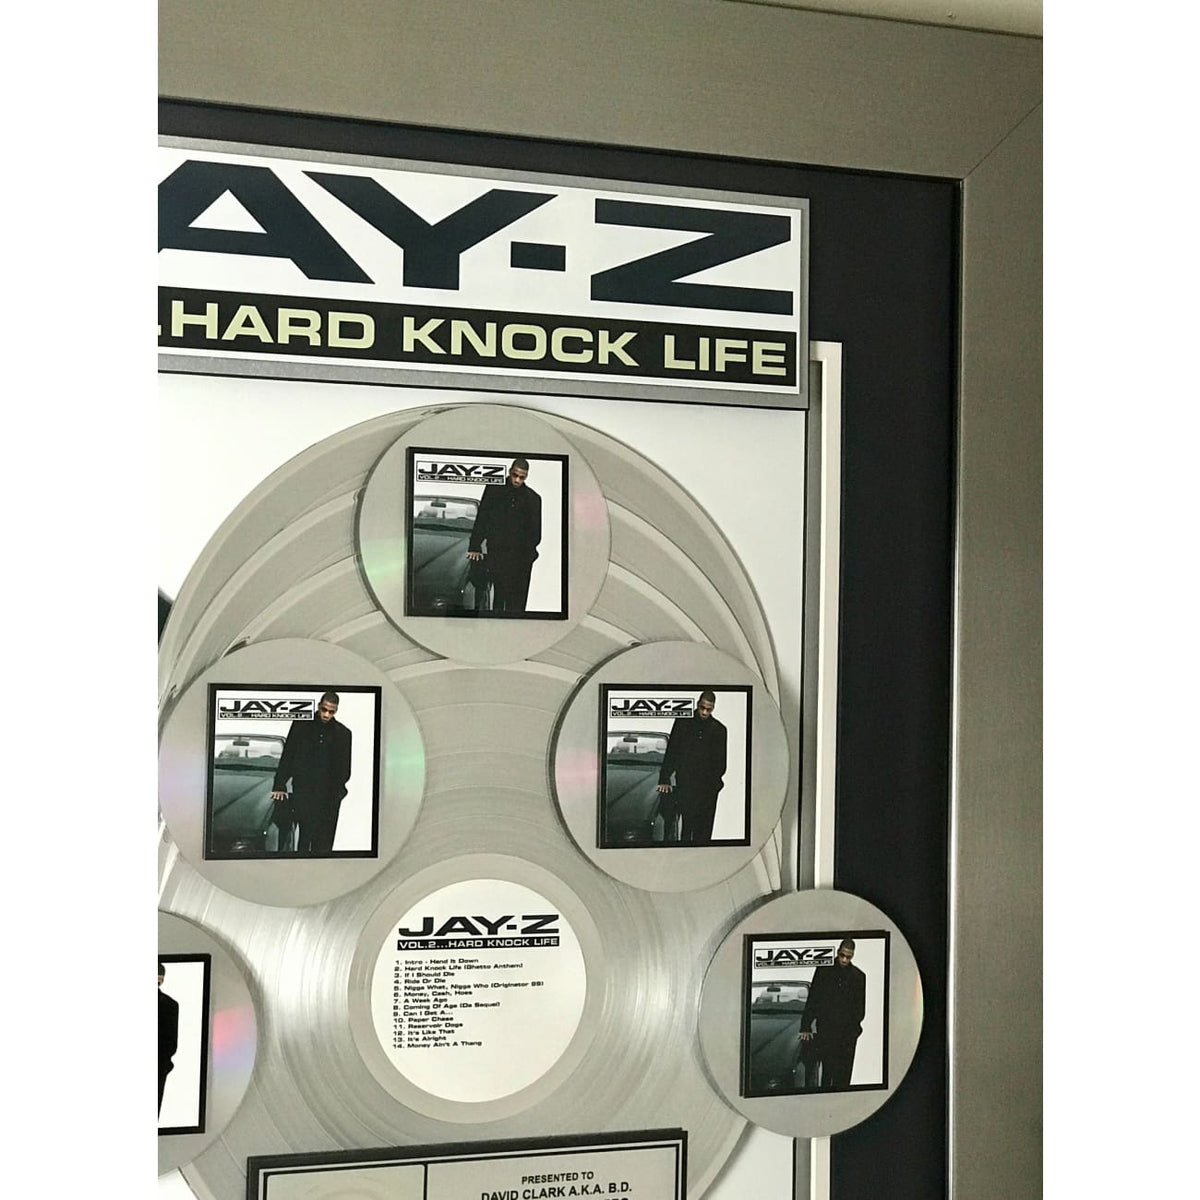 Jay-Z Vol. 2 Hard Knock Life RIAA 5x Multi-Platinum Album Award